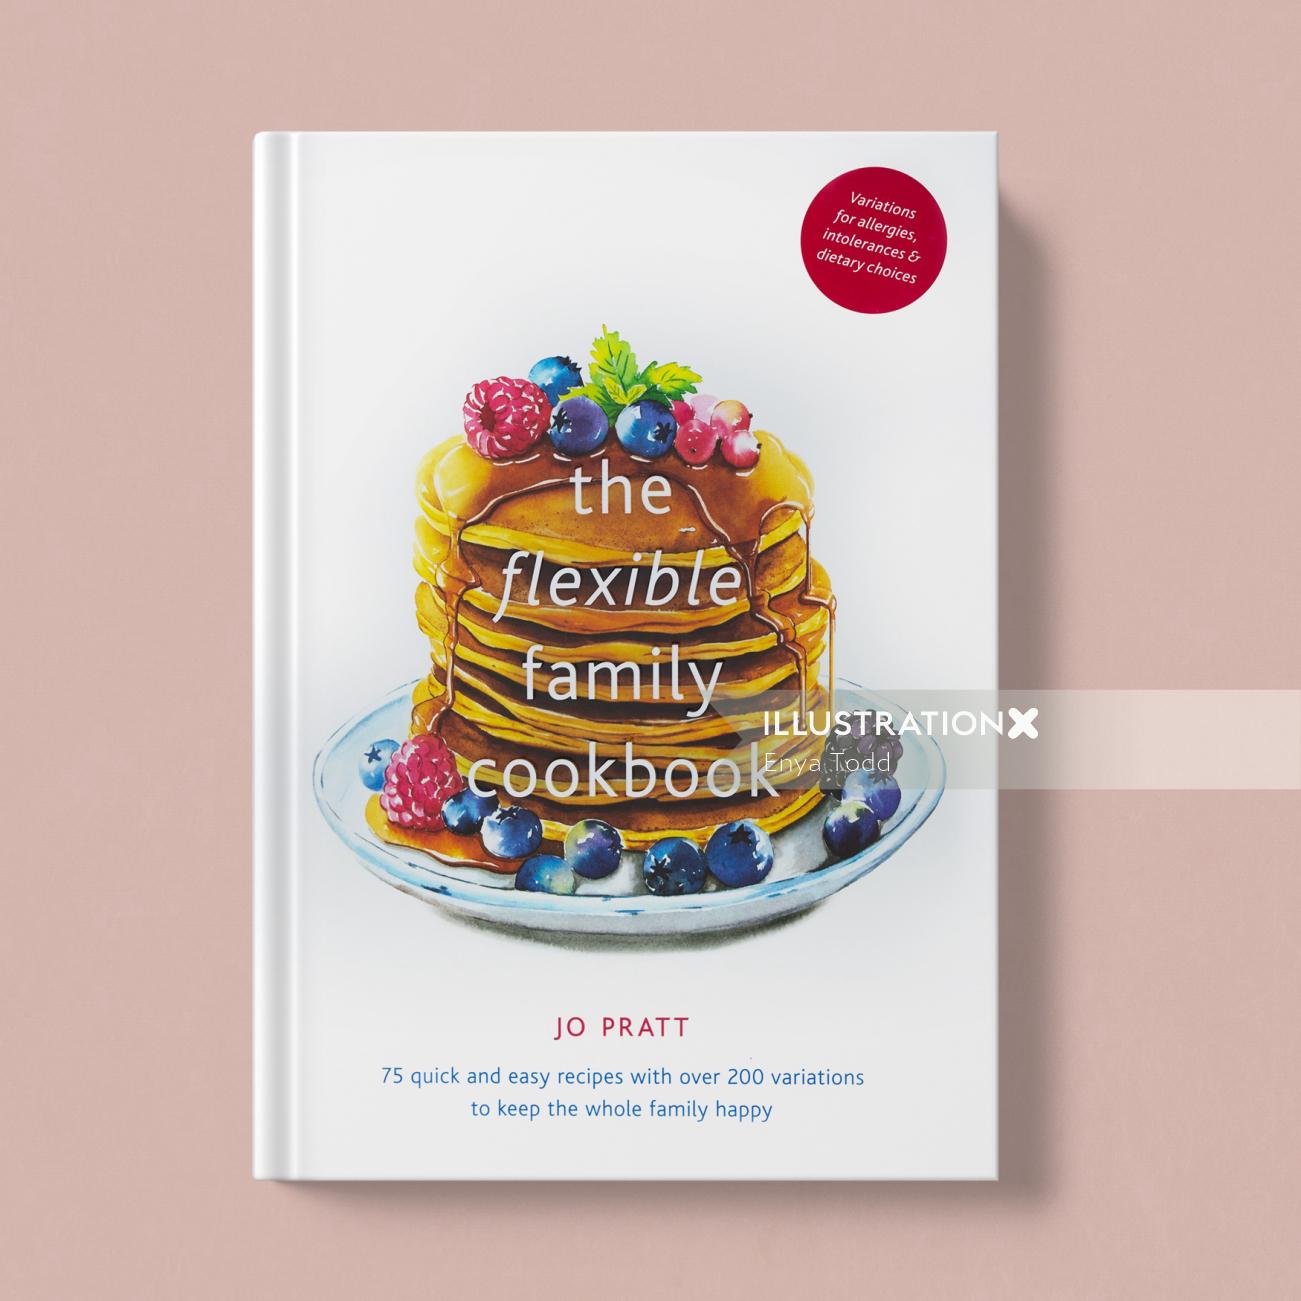 The flexible family cookbook cover art